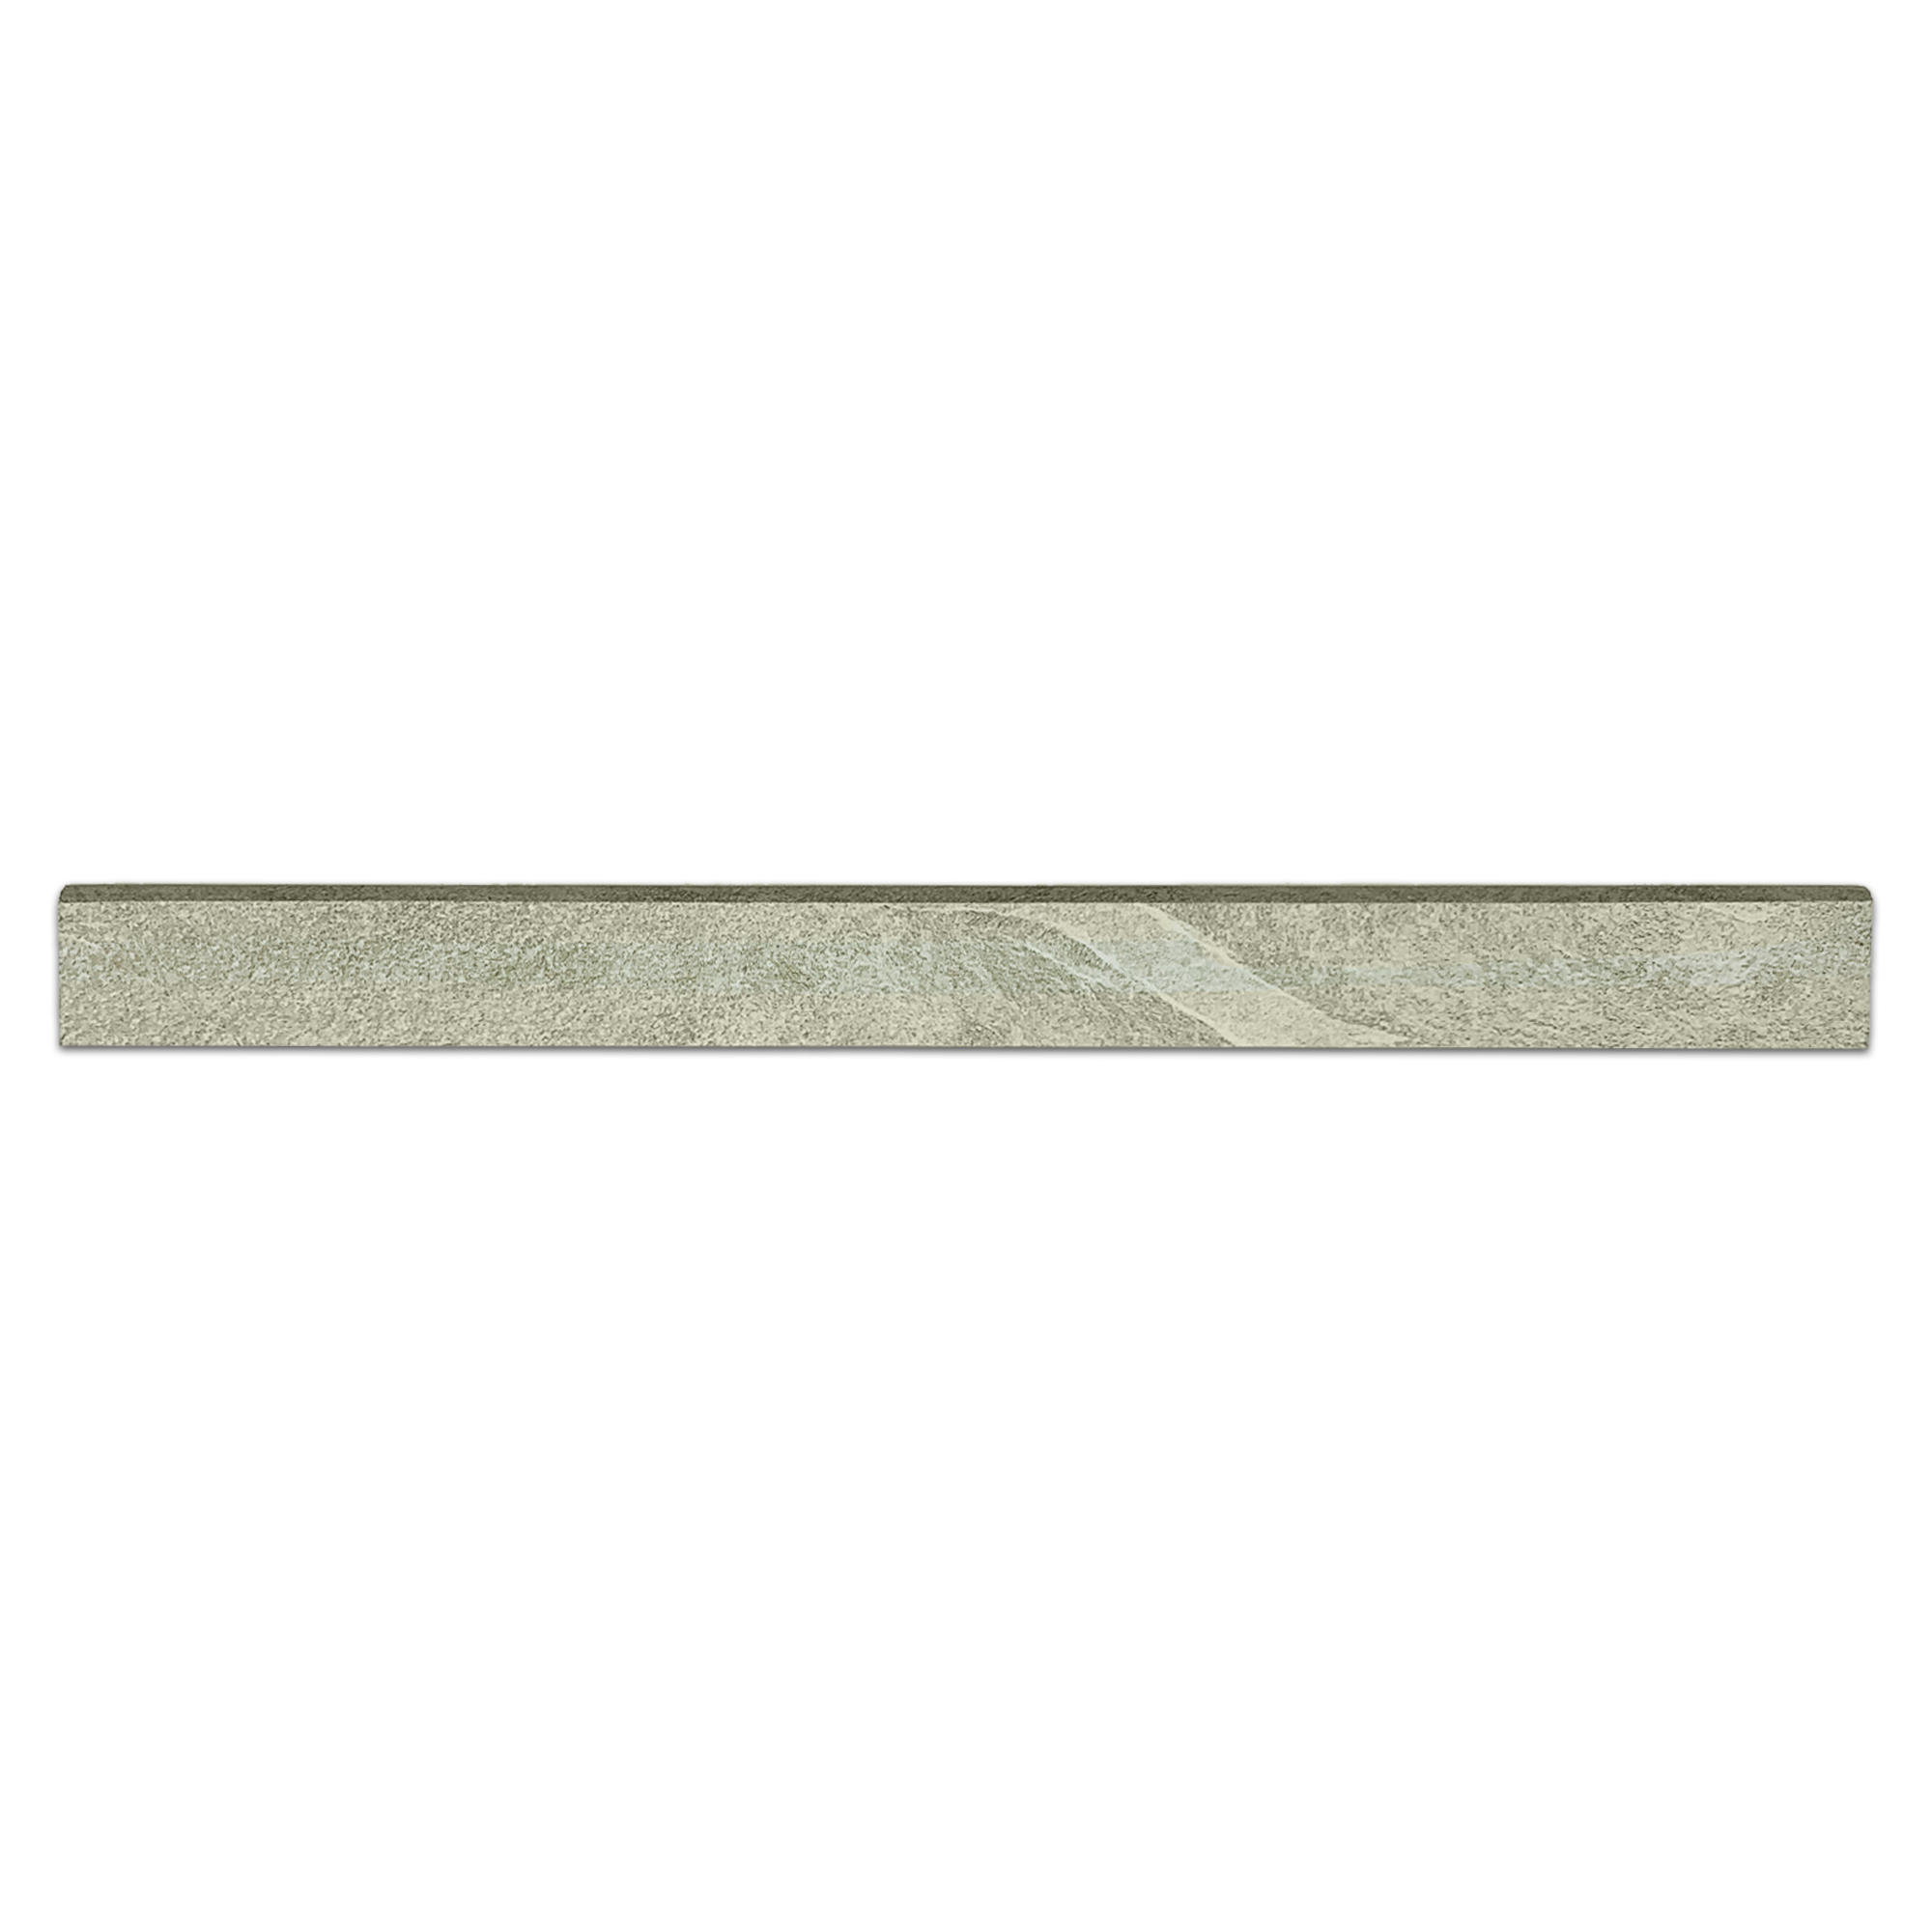 Elon Ecostone Sand Porcelain Bullnose 2x24 Natural SP115 - Surface Group International Product